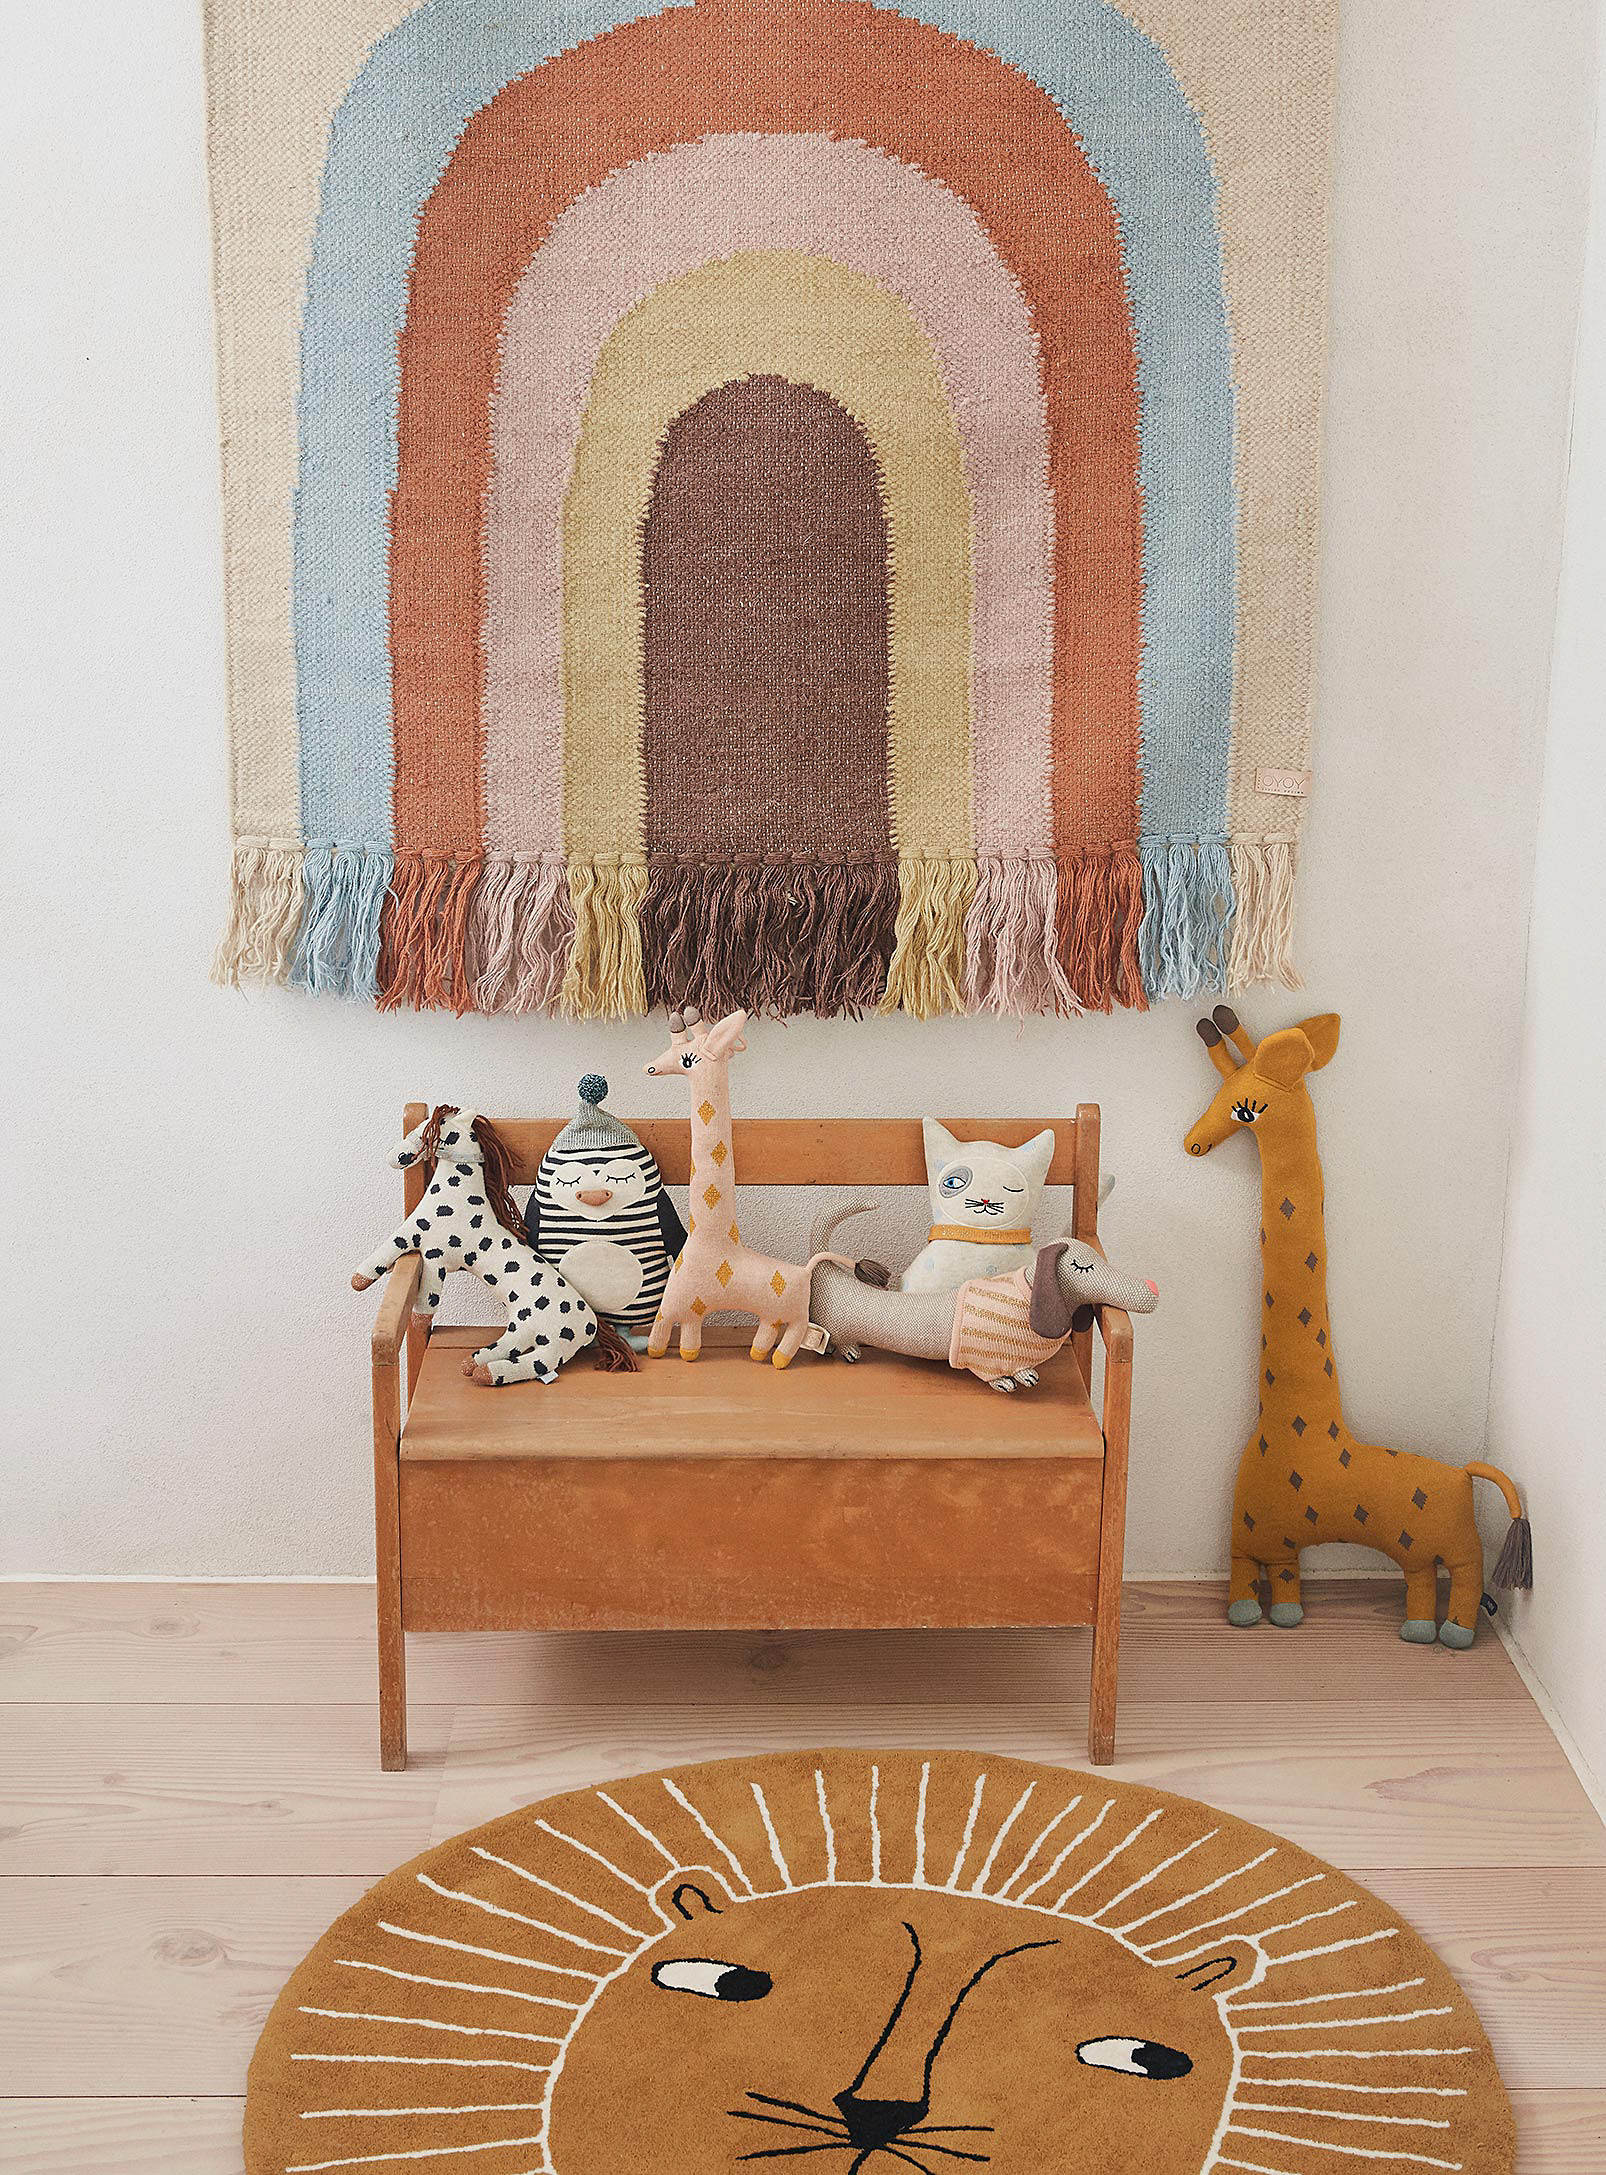 OYOY Living design - Playful lion circular rug 95 cm in diameter